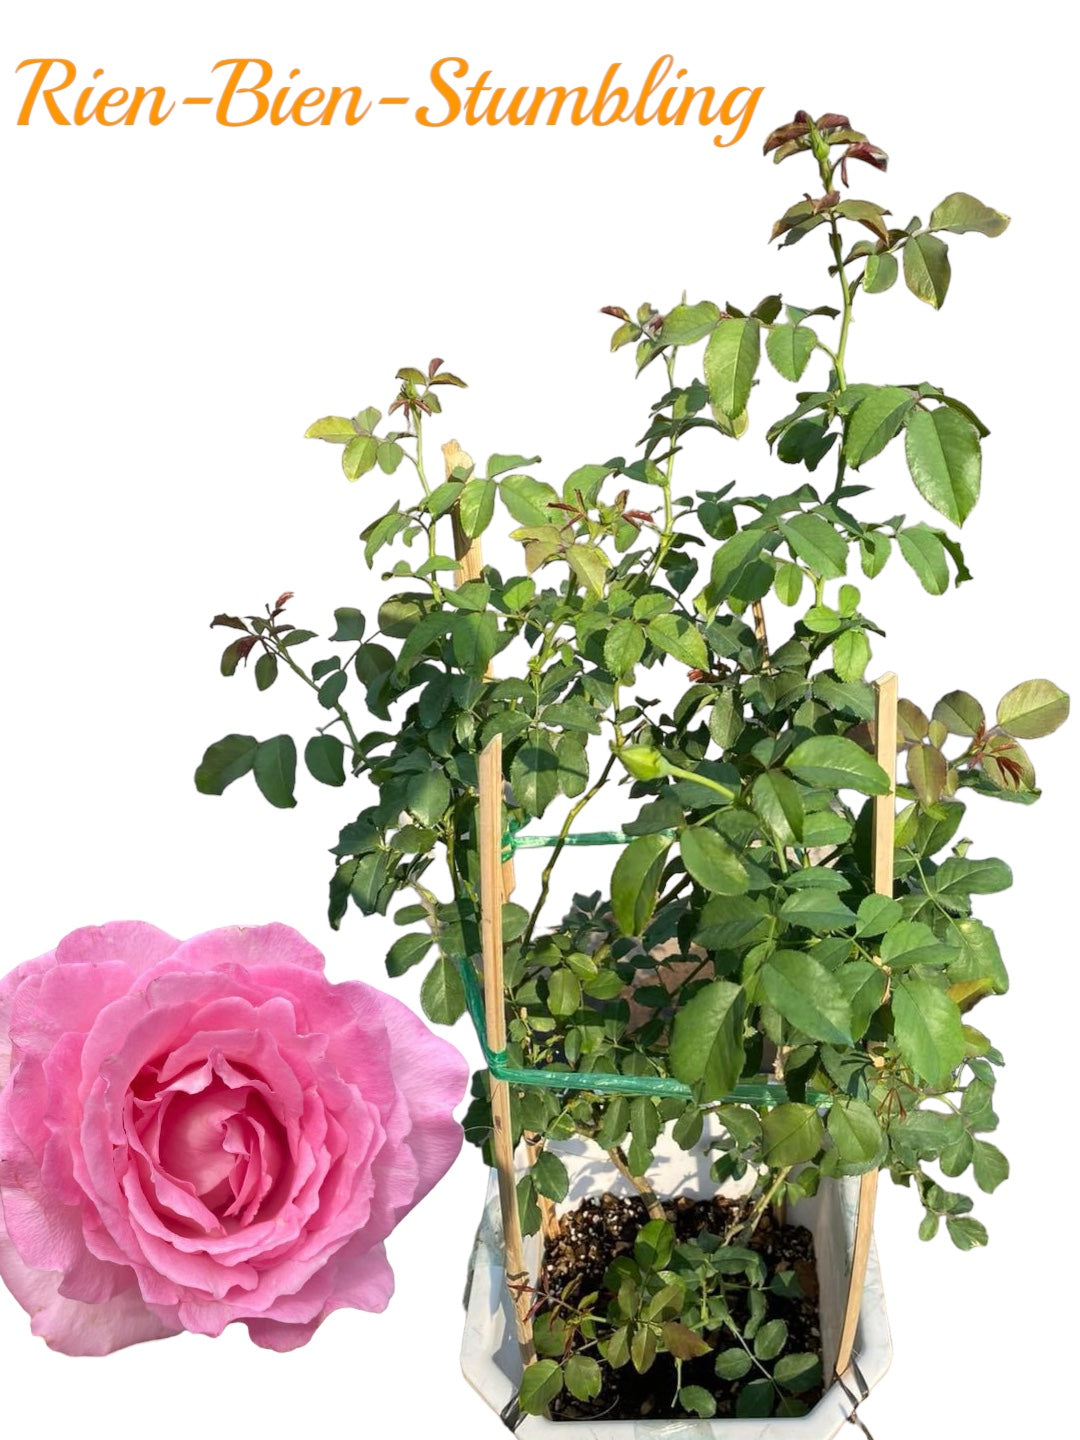 Rien-Bien-Stumbling Potted Rose Plant